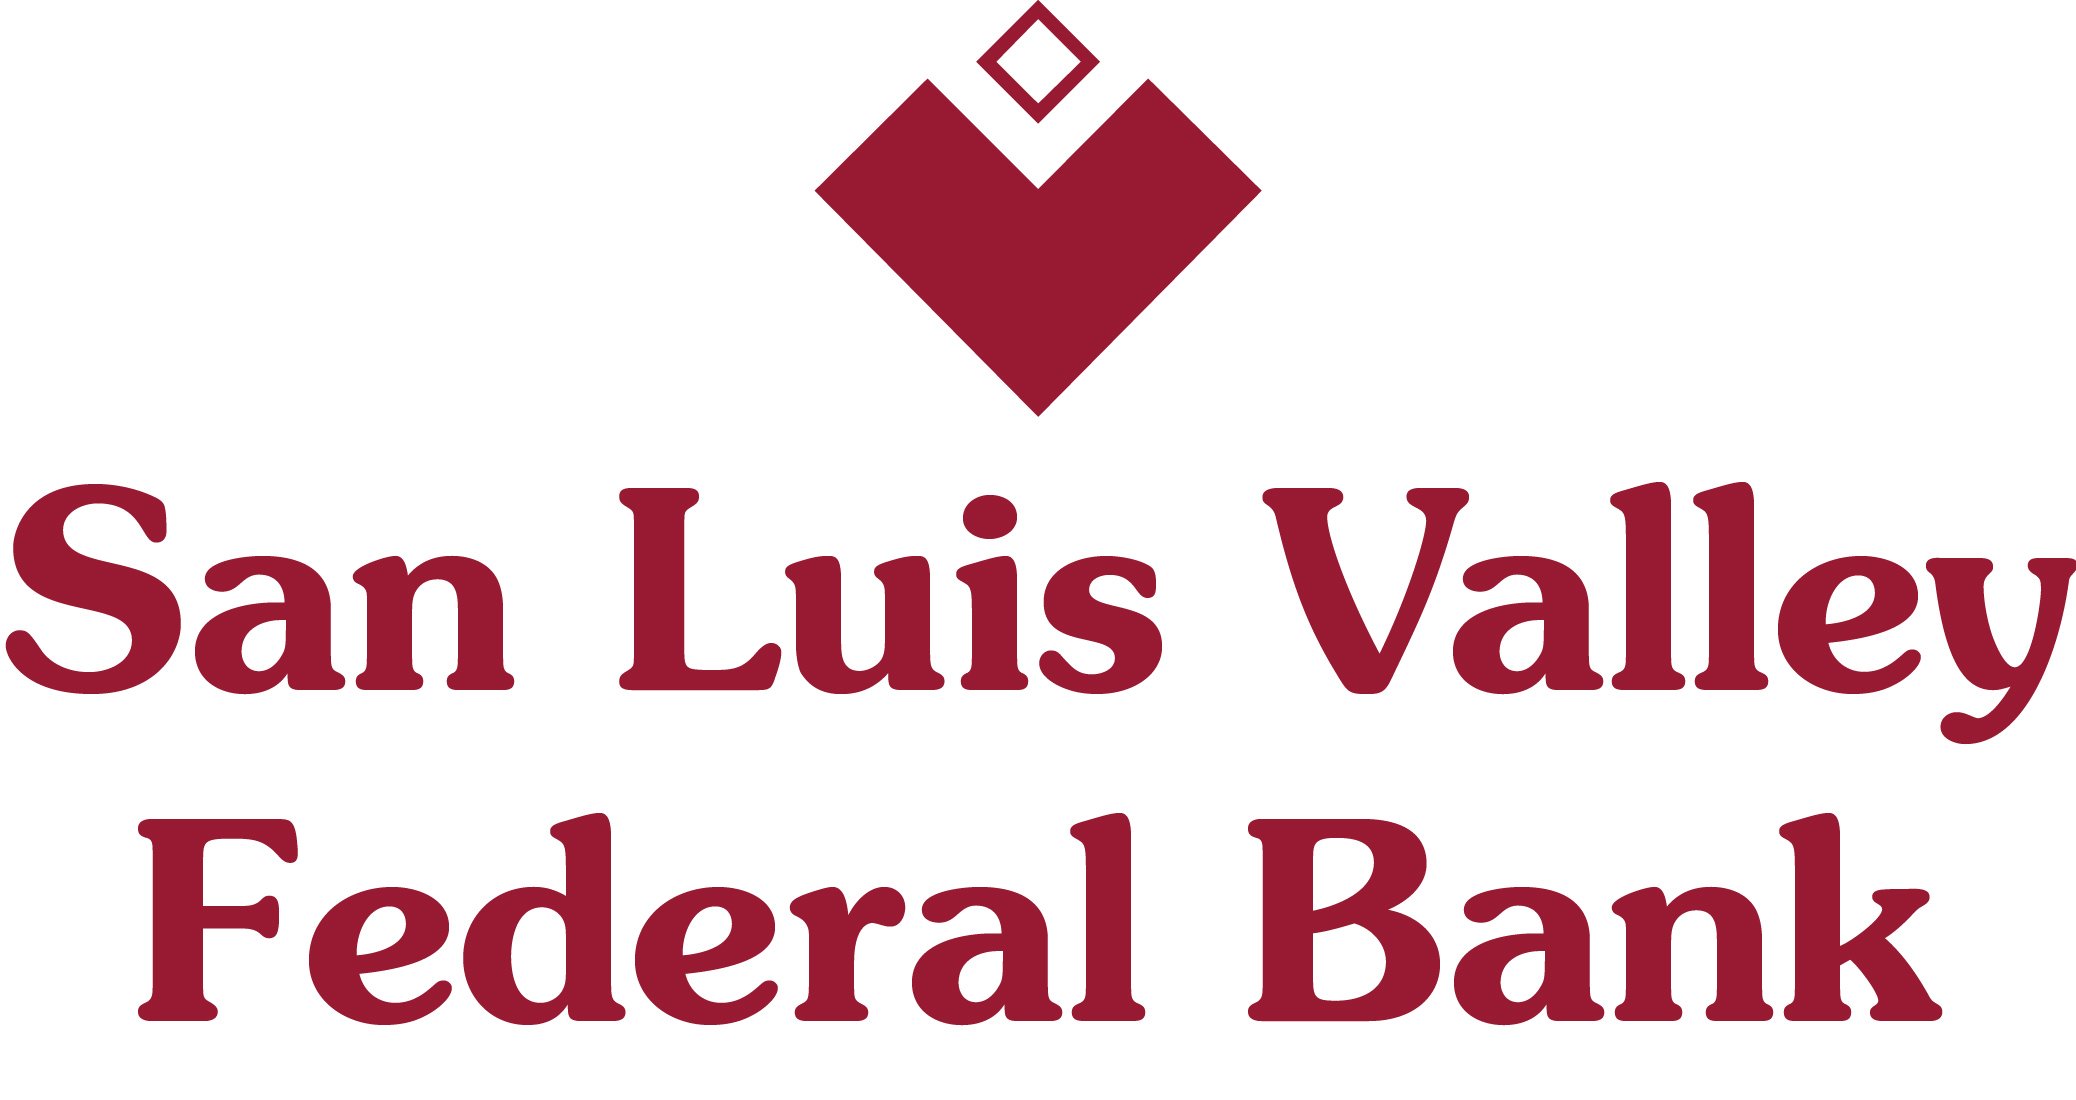 San Luis Valley Federal